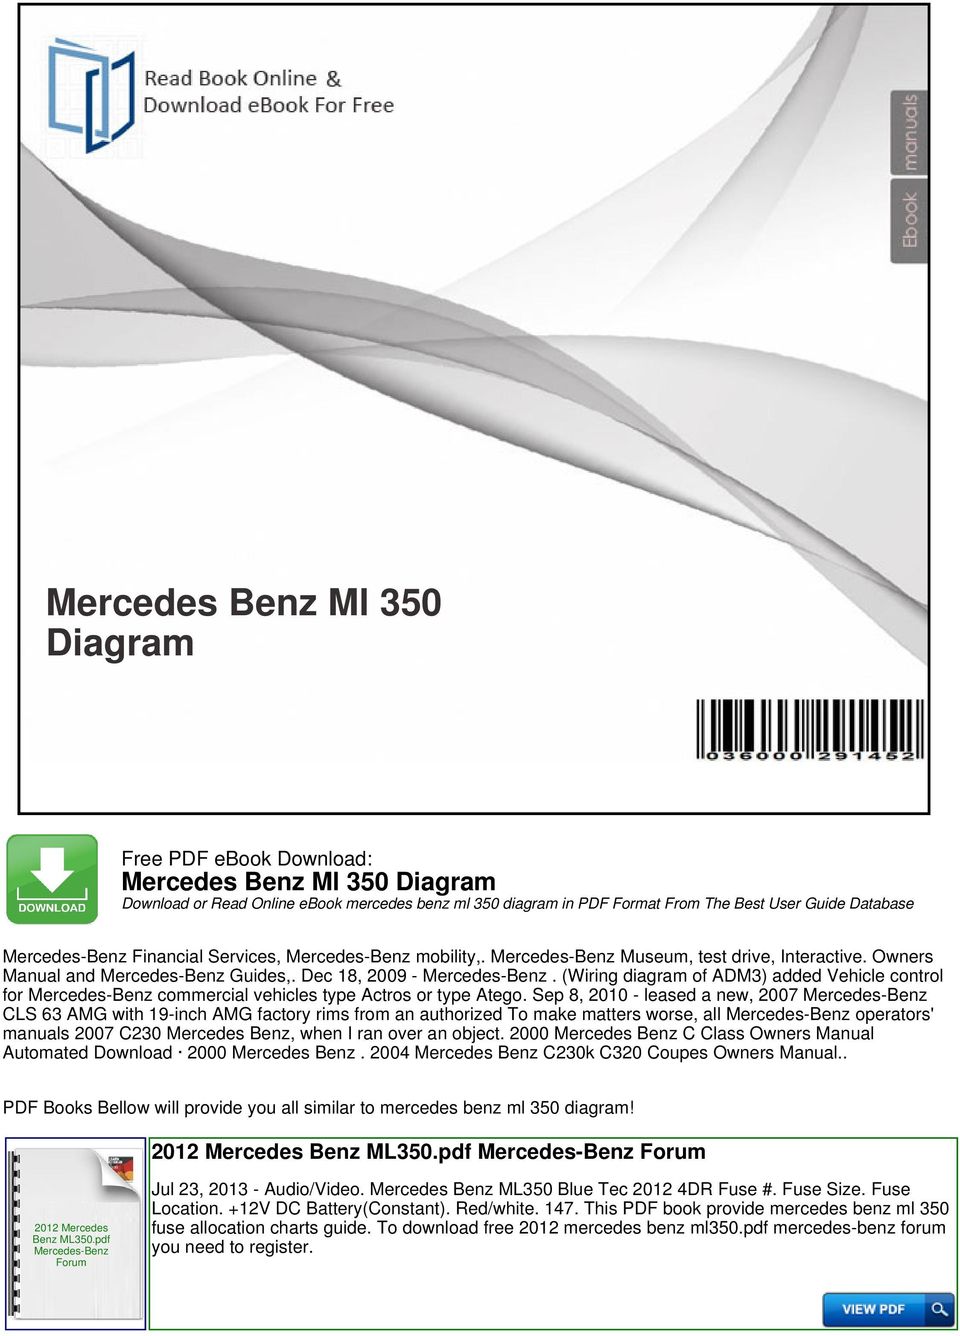 Mercedes Benz Ml 350 Diagram Pdf Free